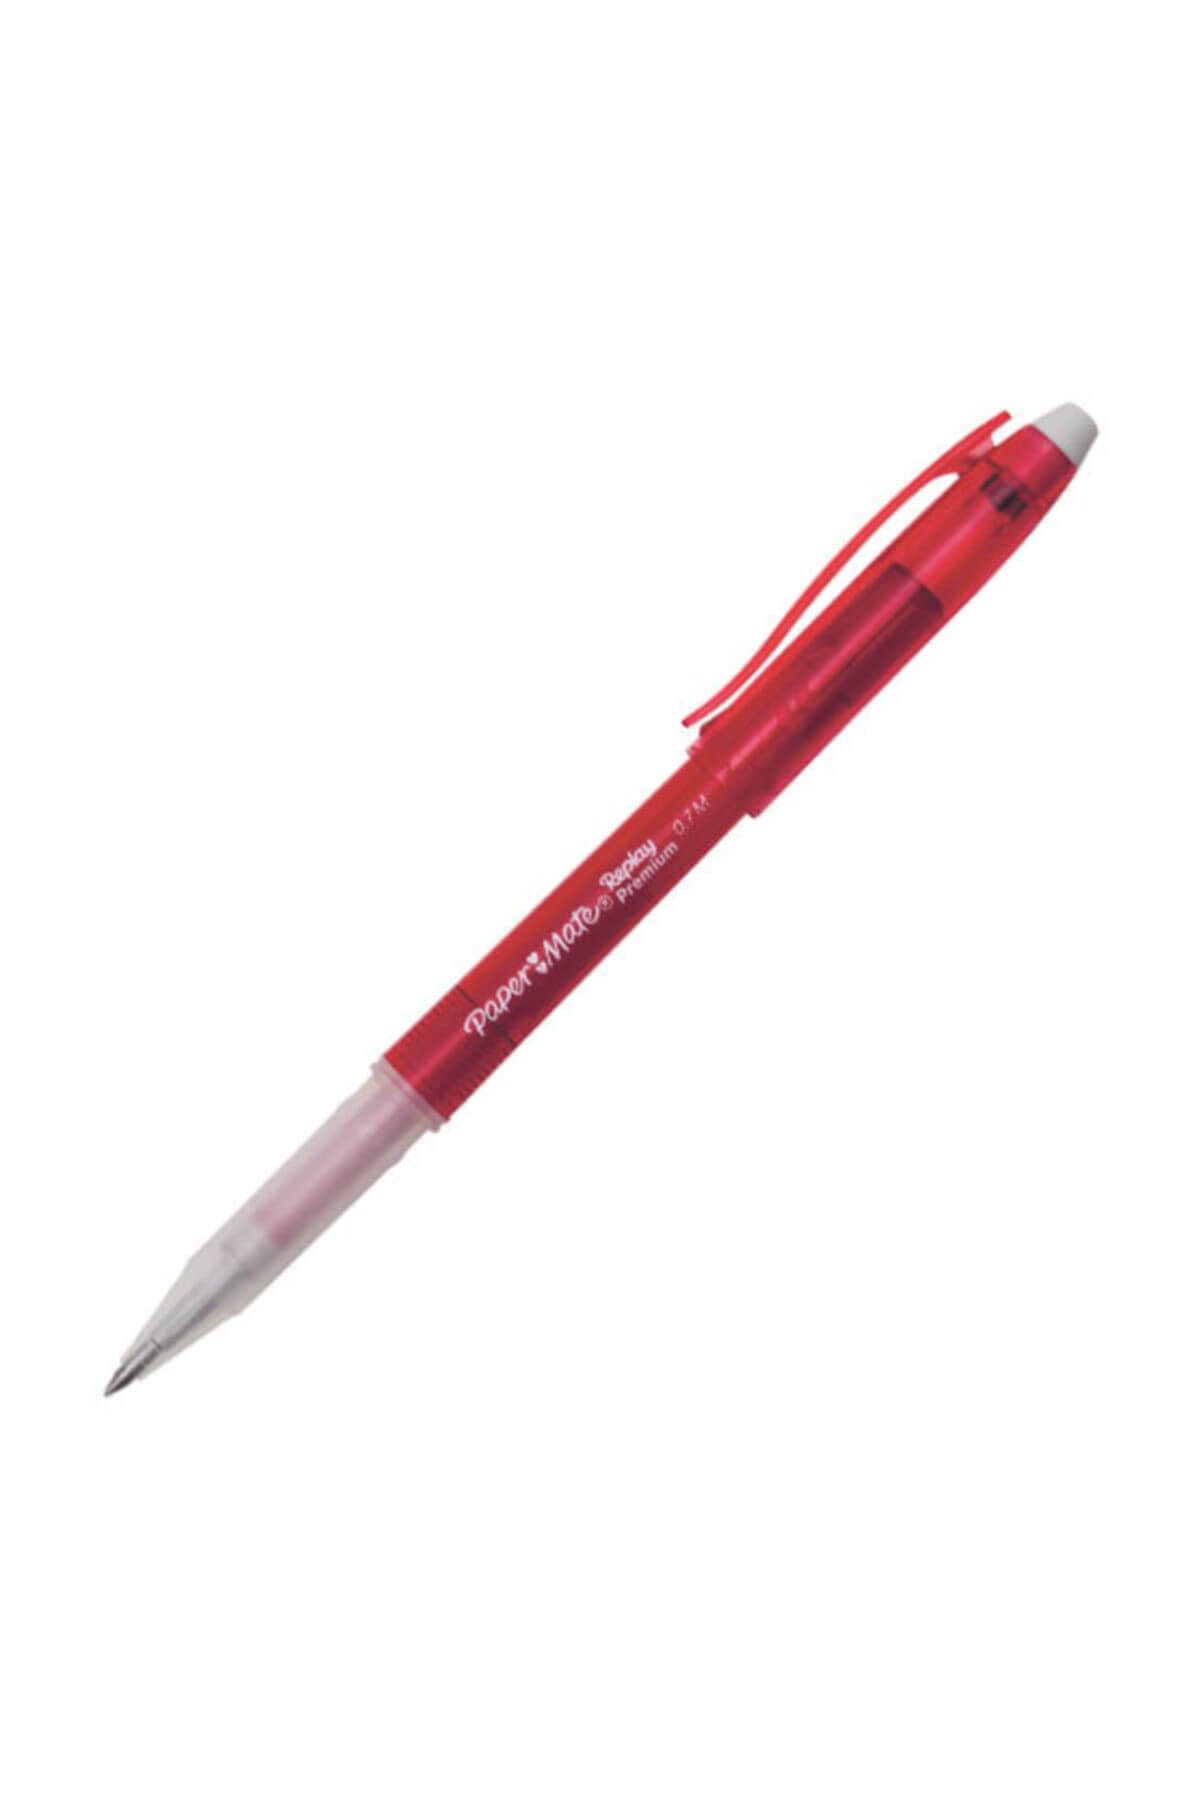 Paper Mate Replay Premium Silinebilir Jel Kalem Kırmızı 1901324  /